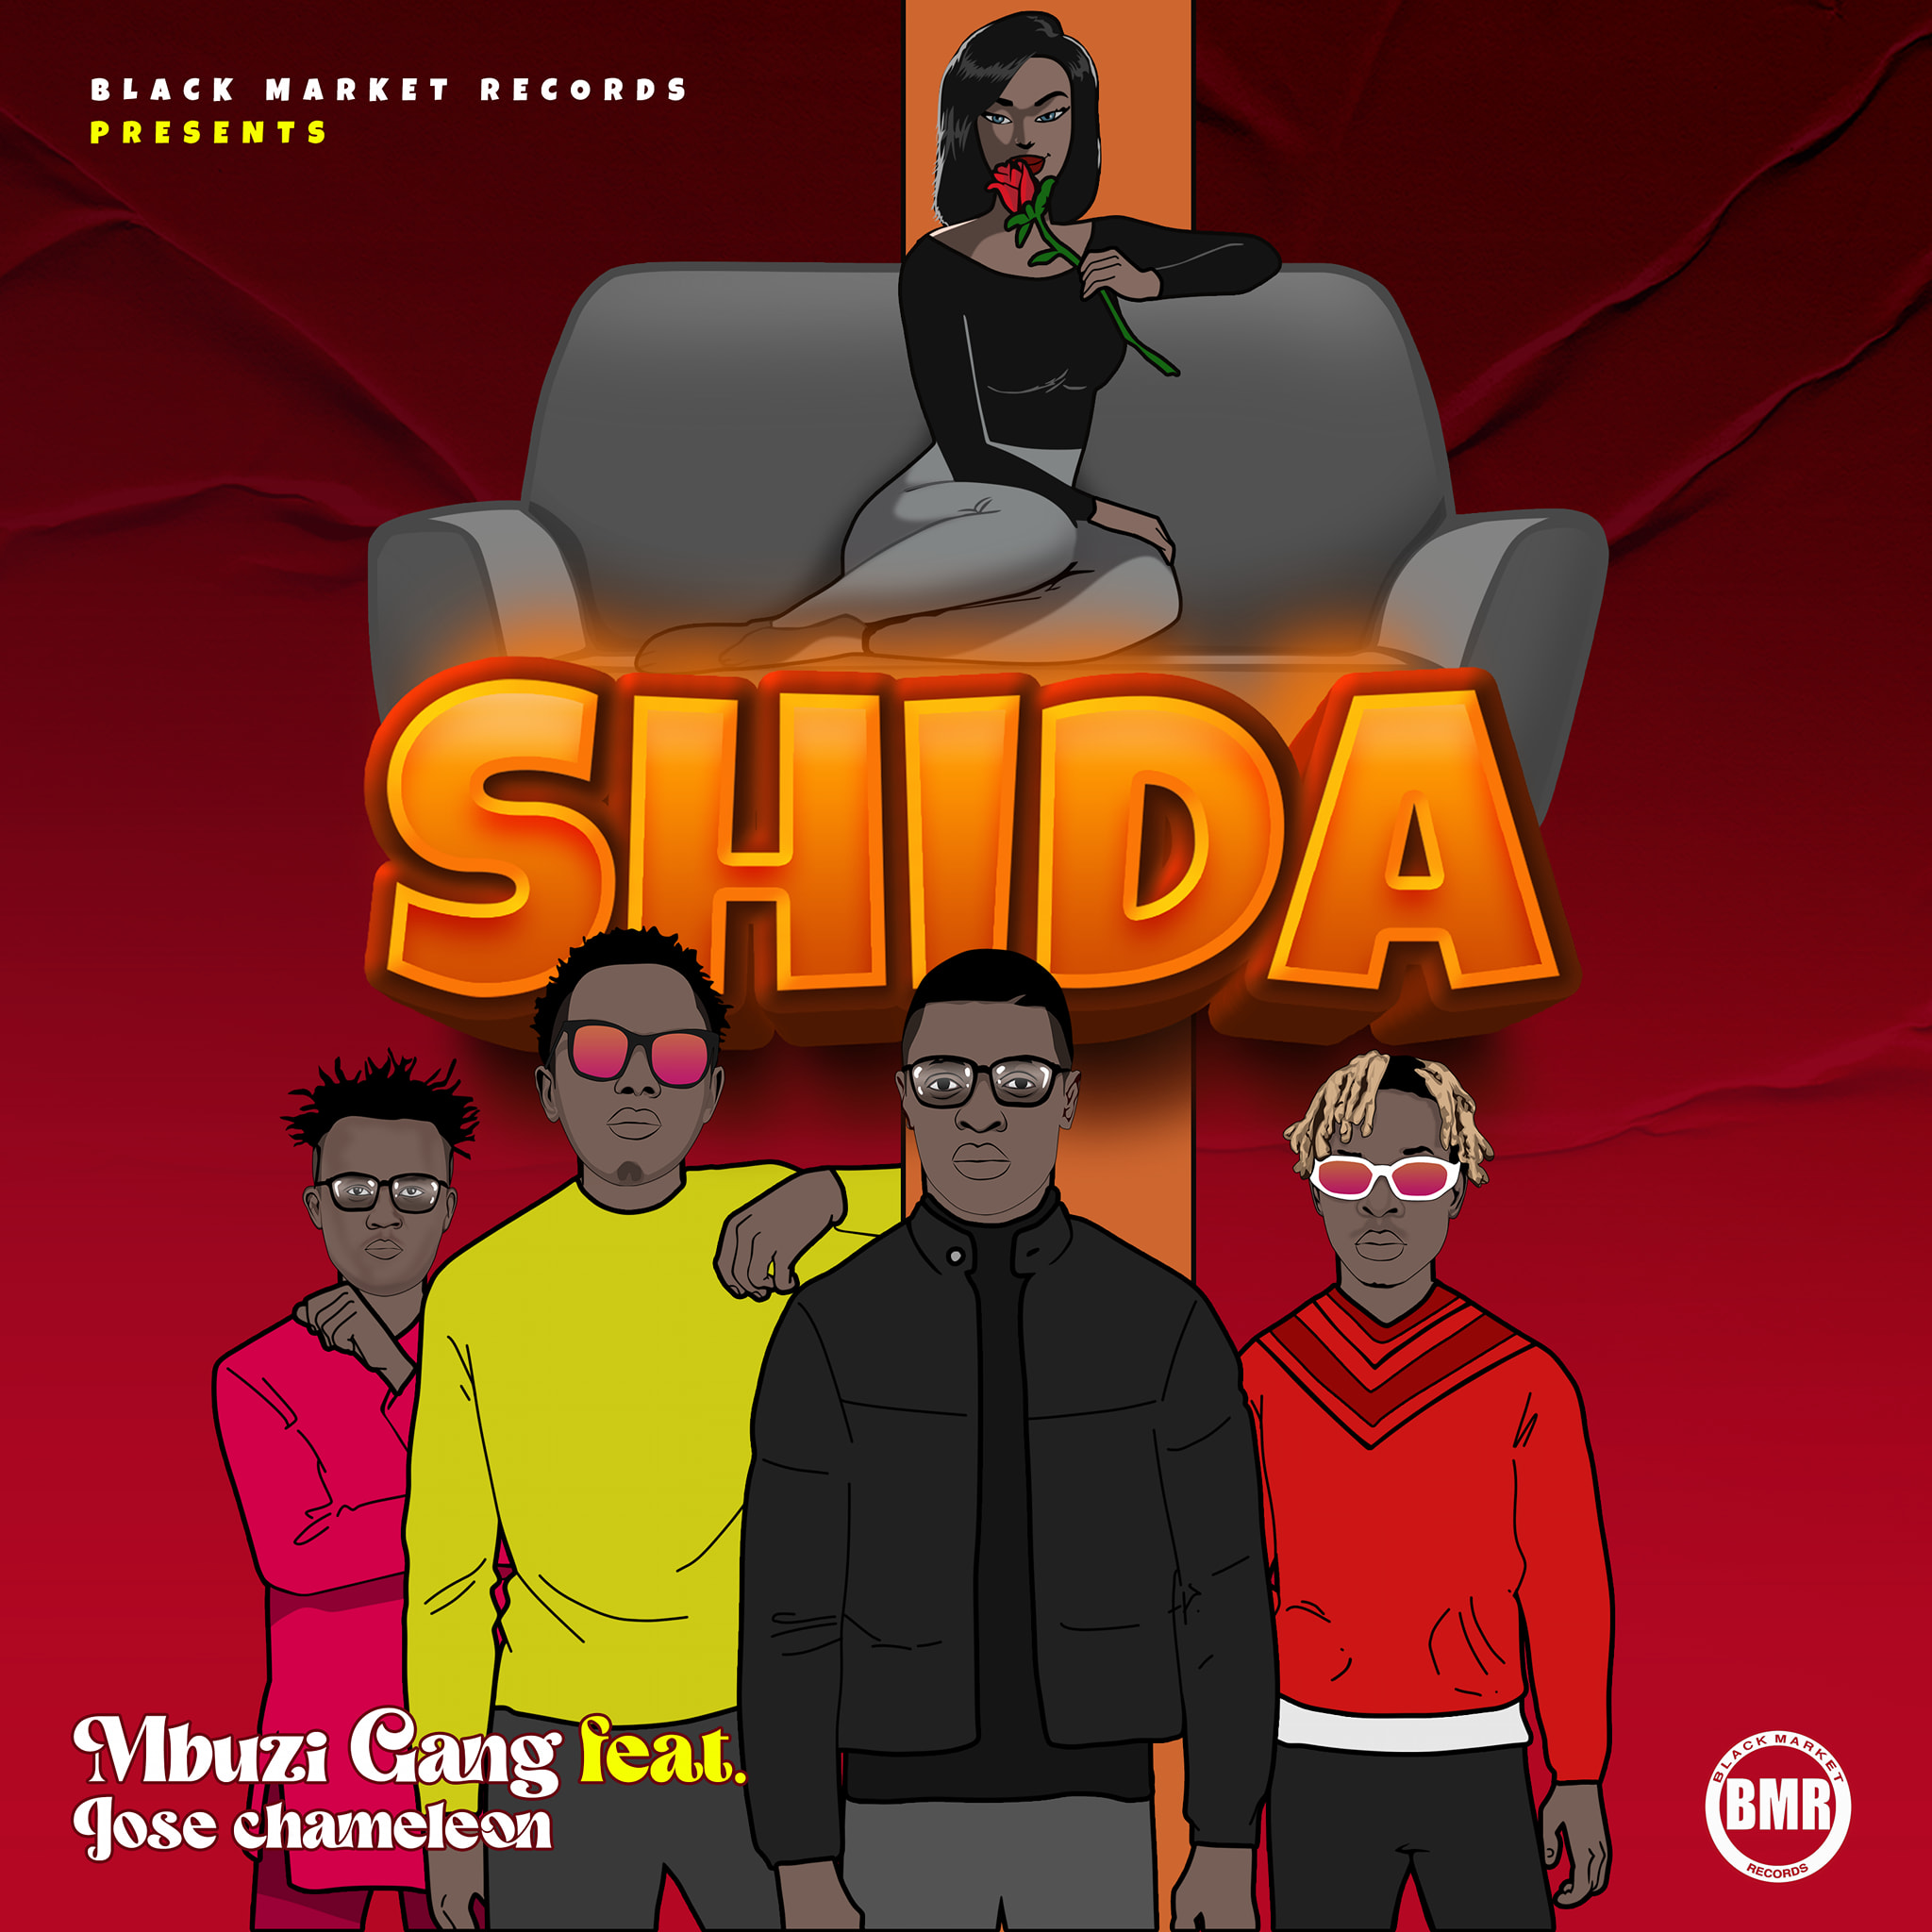 Shida Mbuzi Gang ft Jose Chameleone